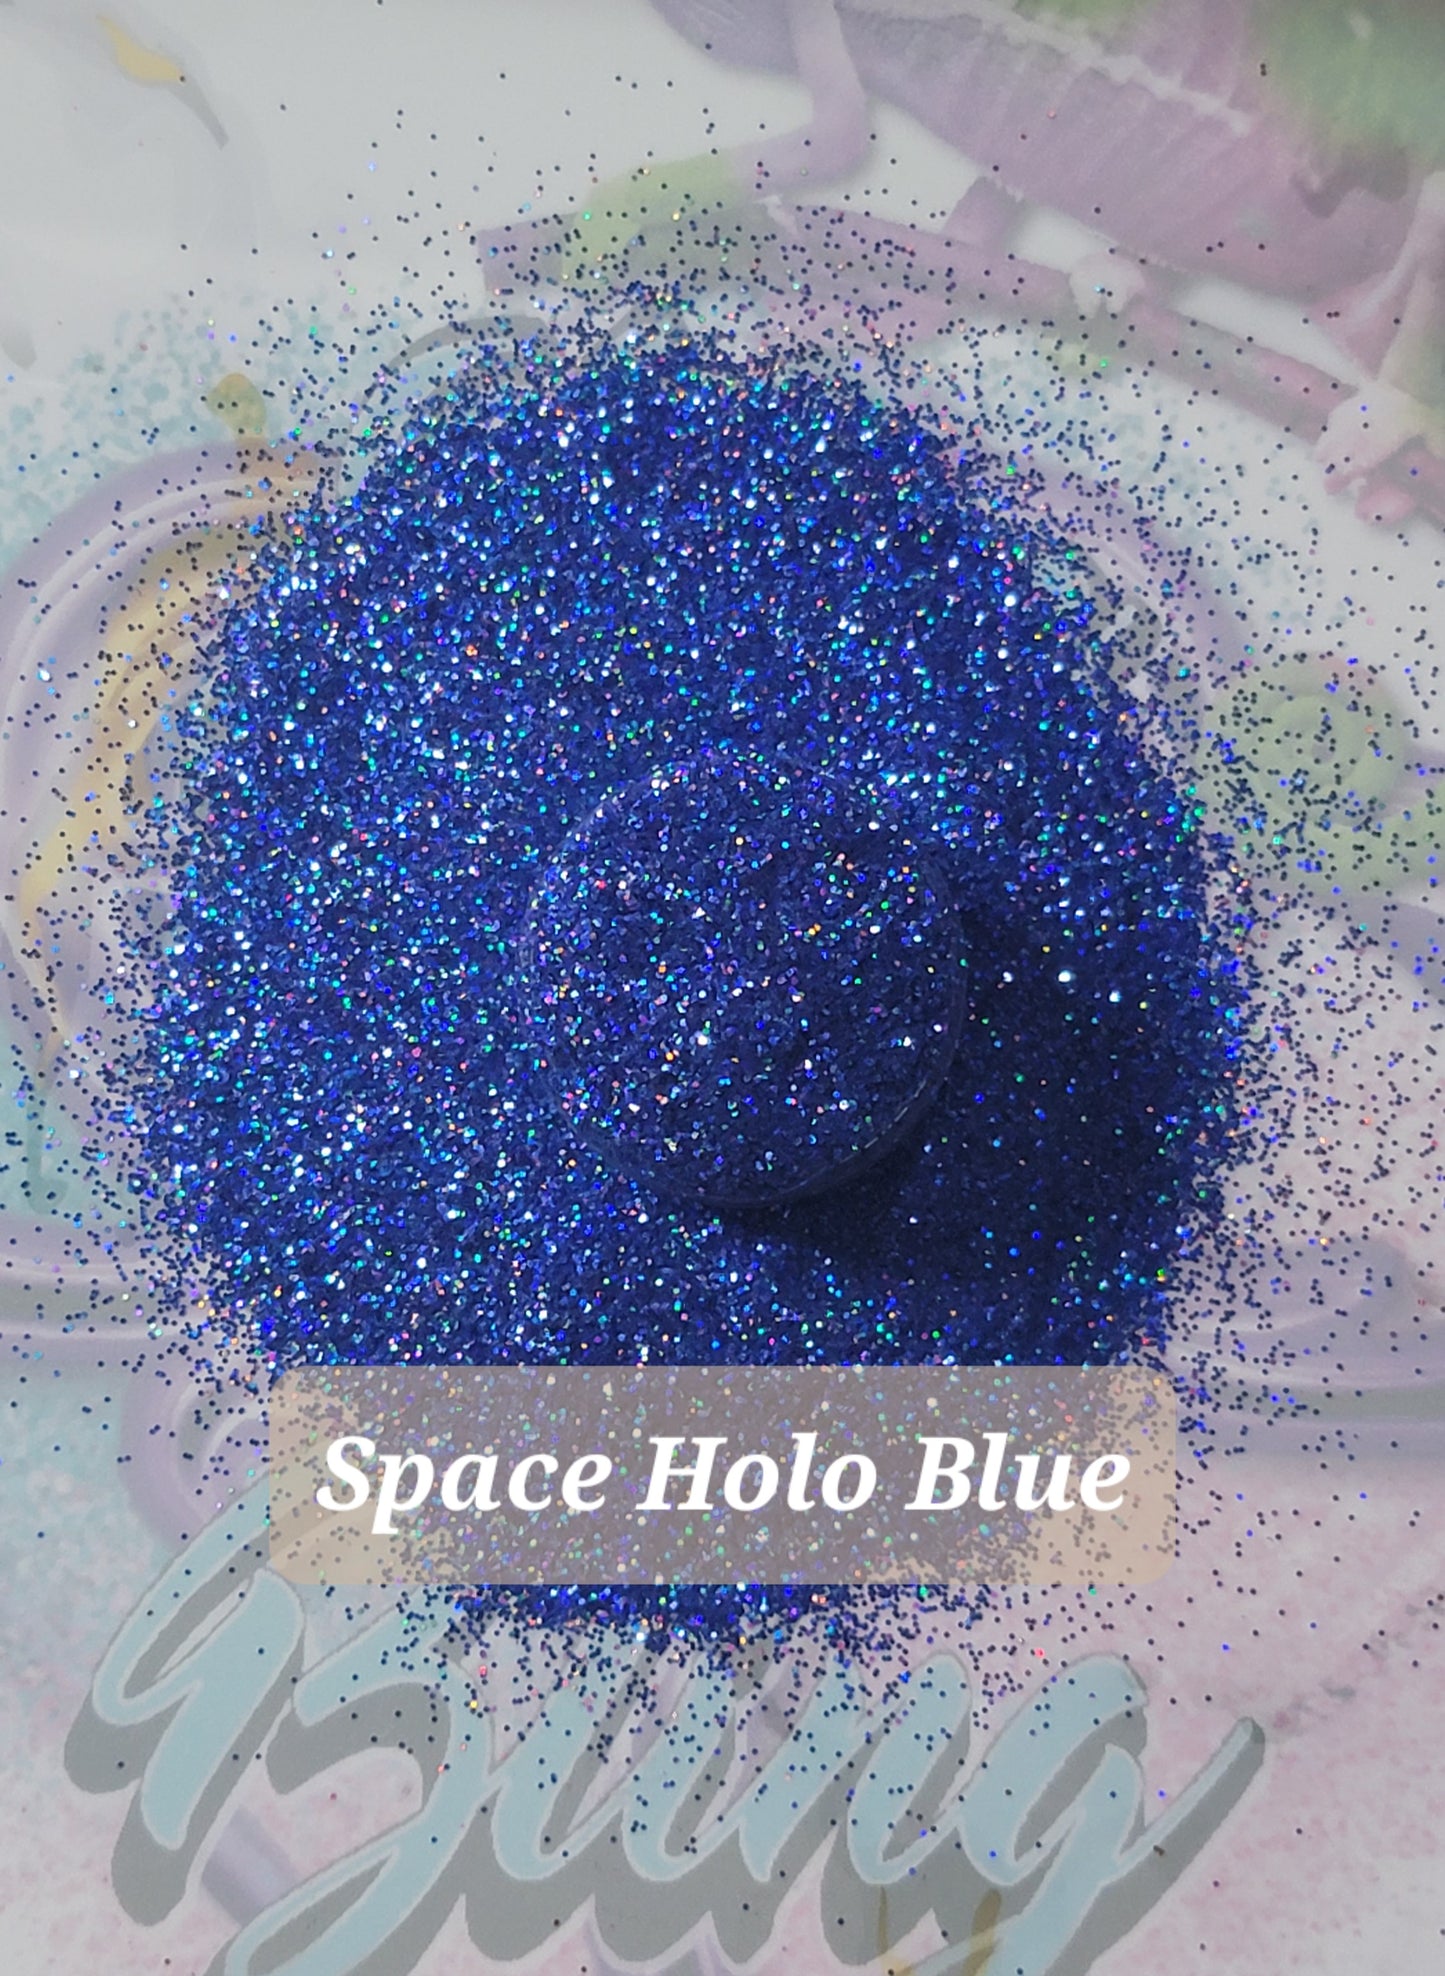 Space Holo Blue